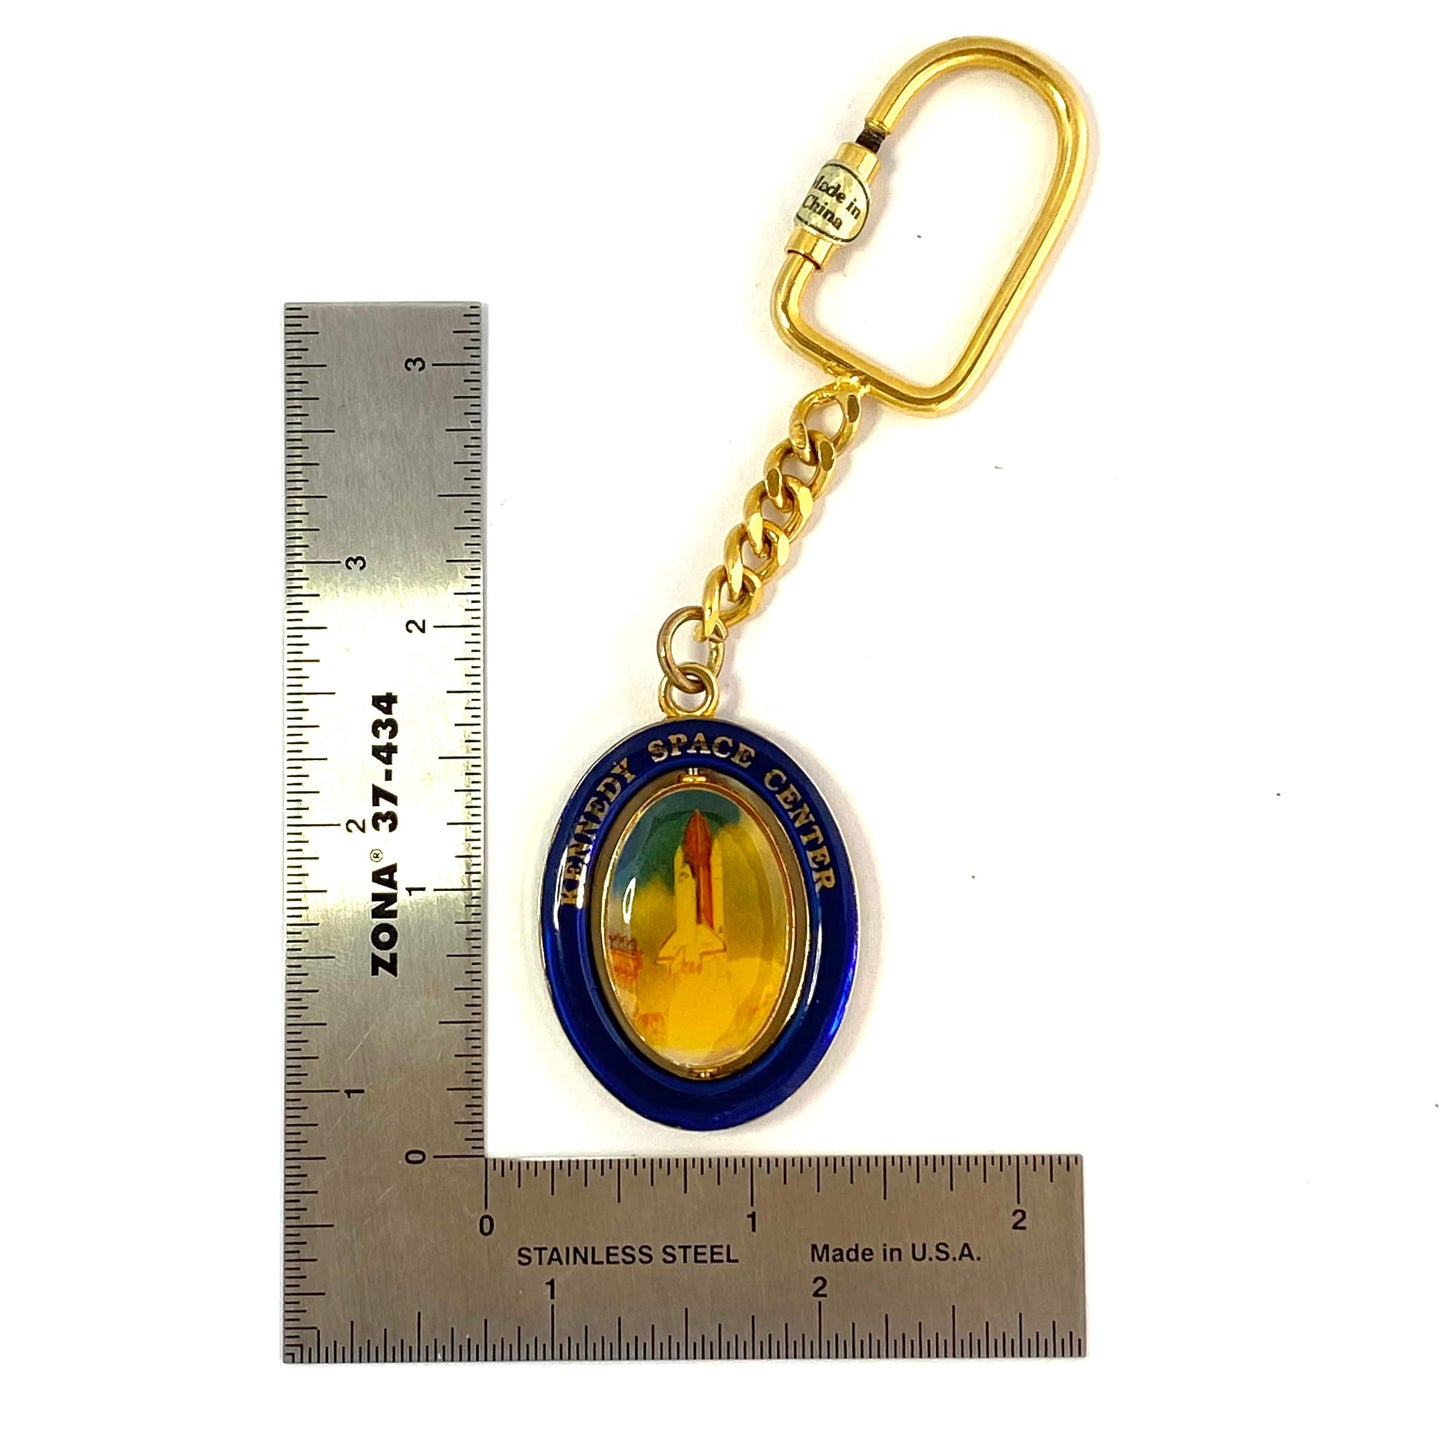 “Kennedy Space Center” Goldtone Spinner Travel Souvenir Keychain Key Ring Charm